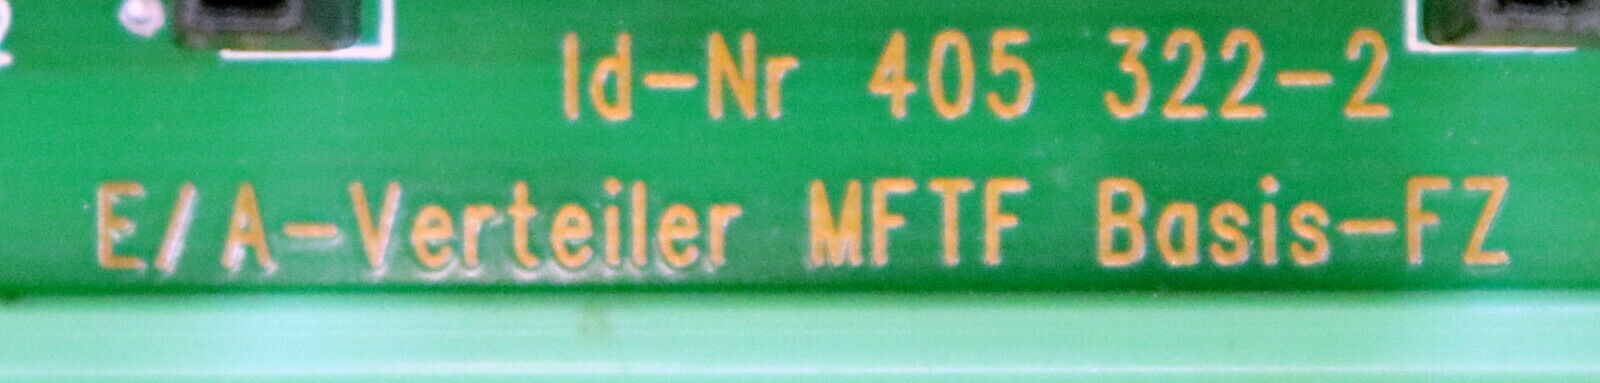 E/A-Verteiler MFTF Basis-FZ No.373-B ID 820 412-2 S/N 9835024 - gebraucht